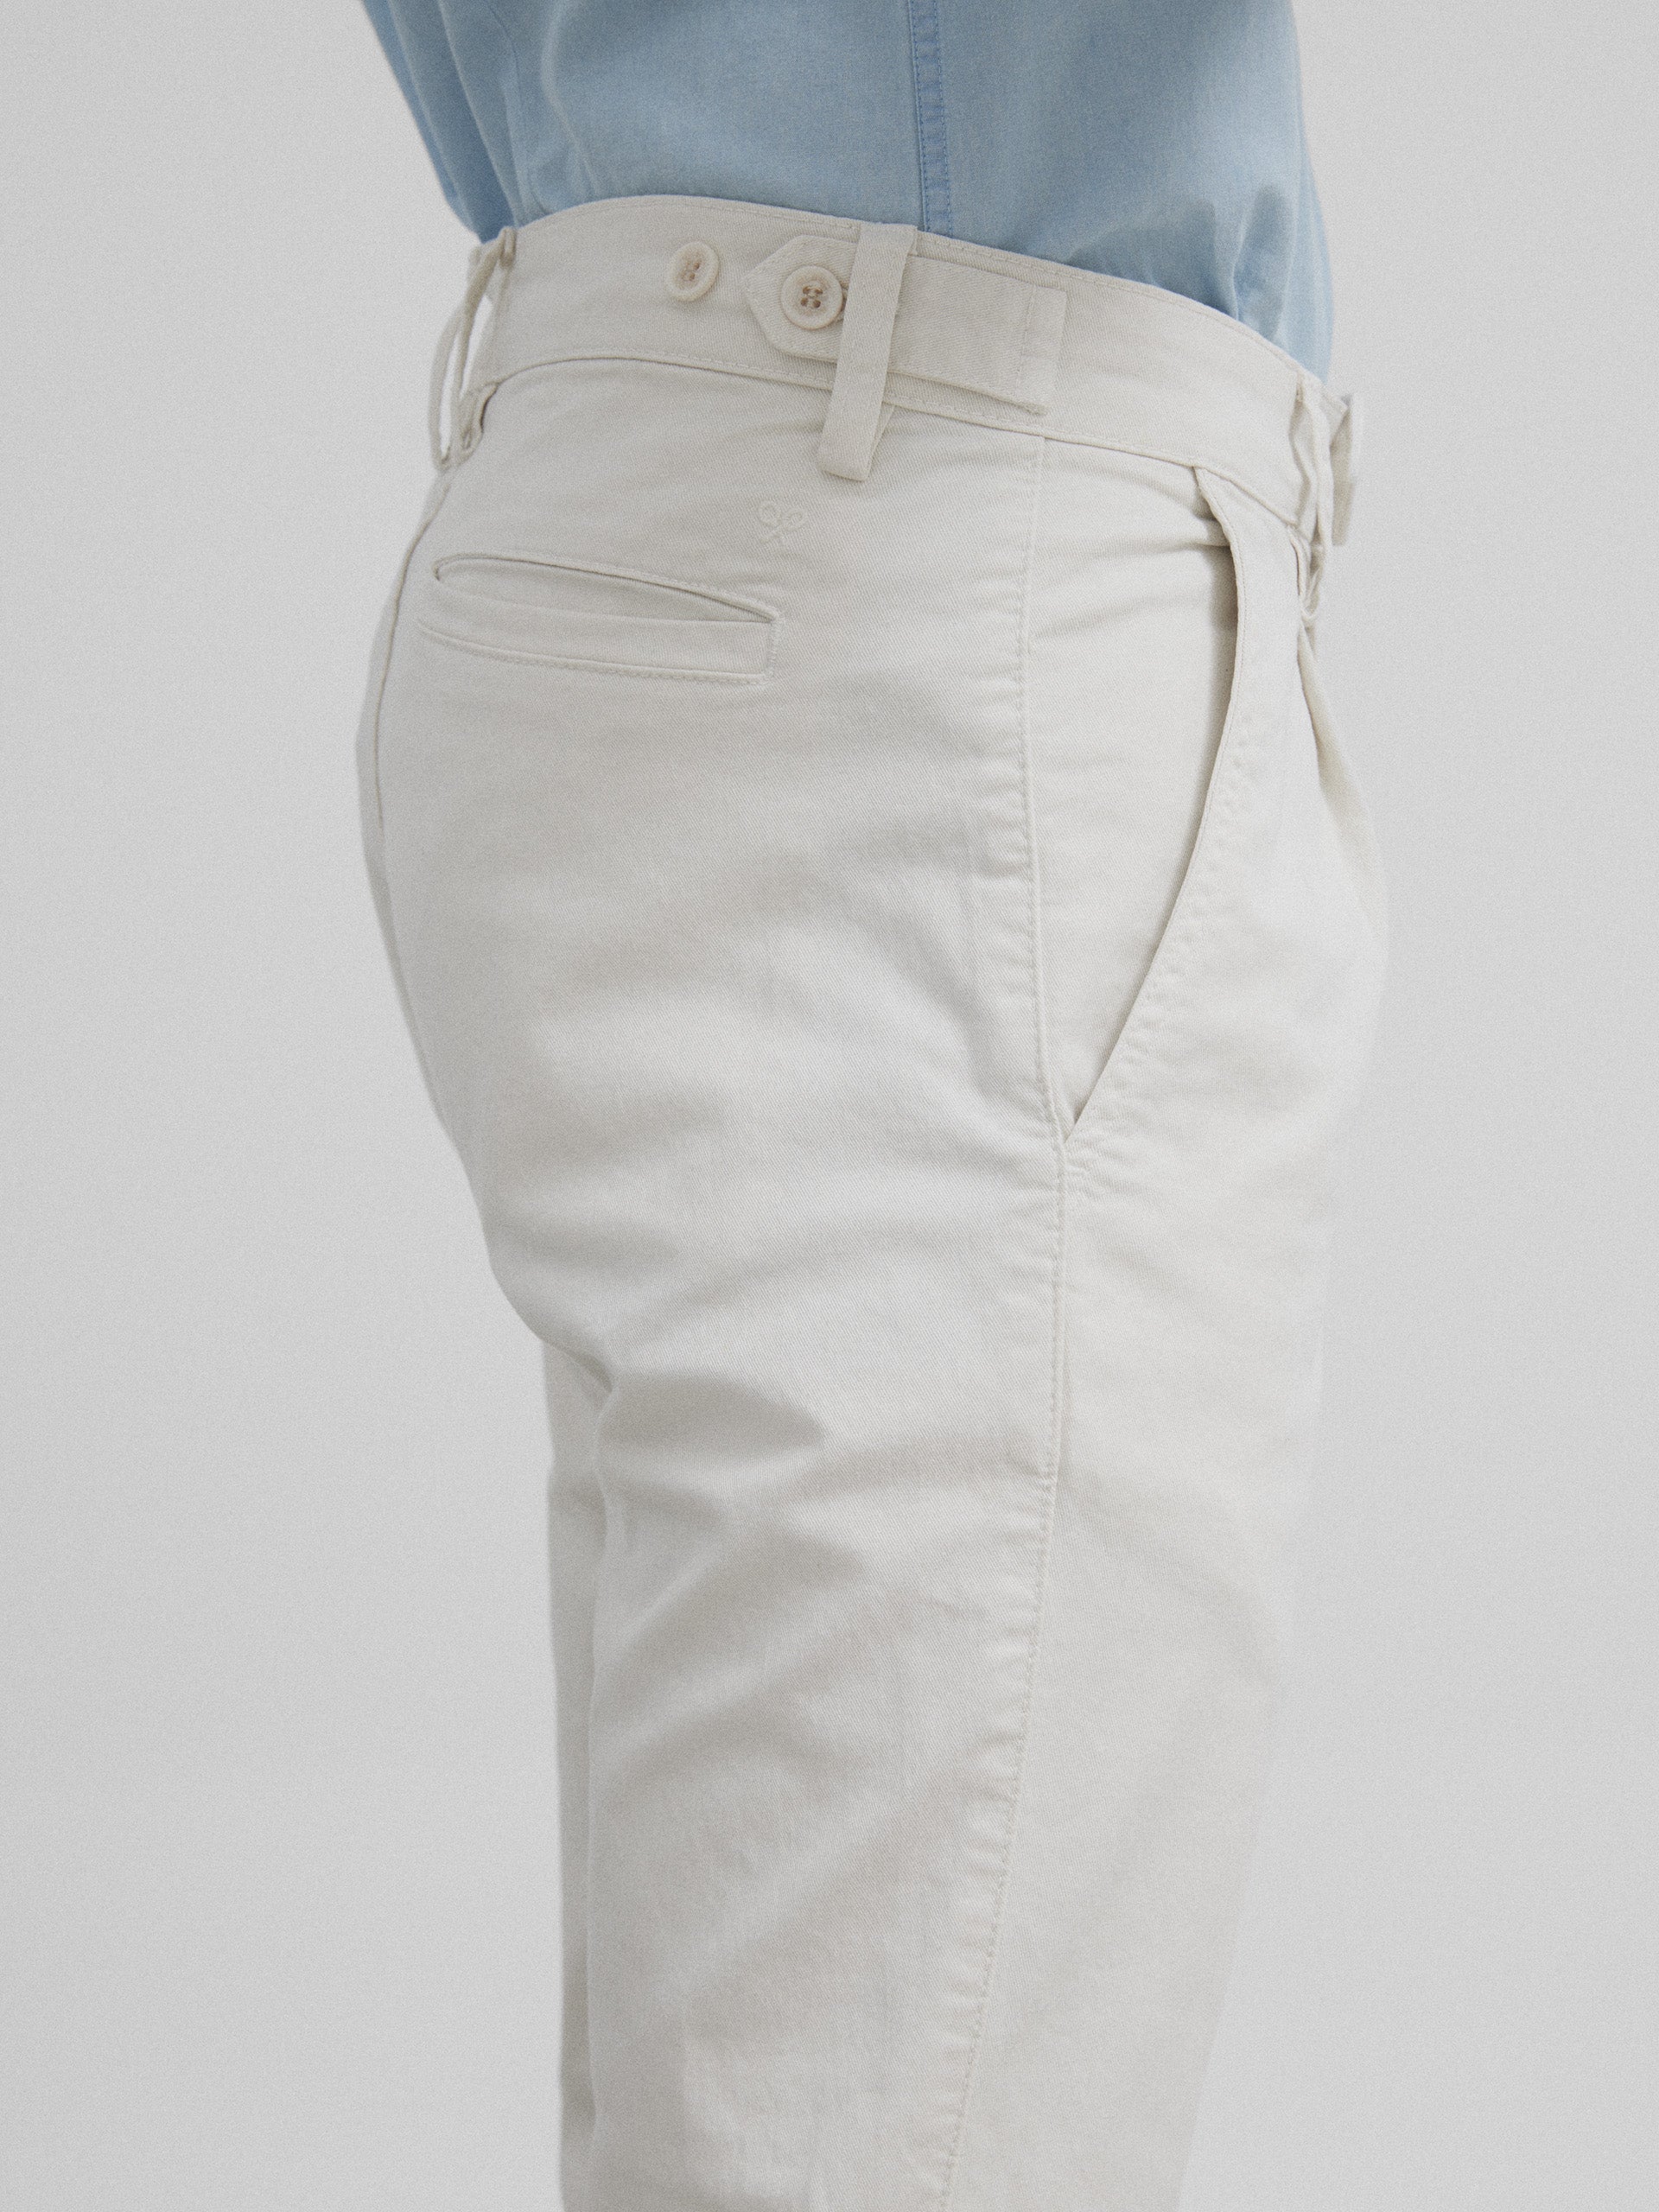 Pantalon sport chino plissé beige clair